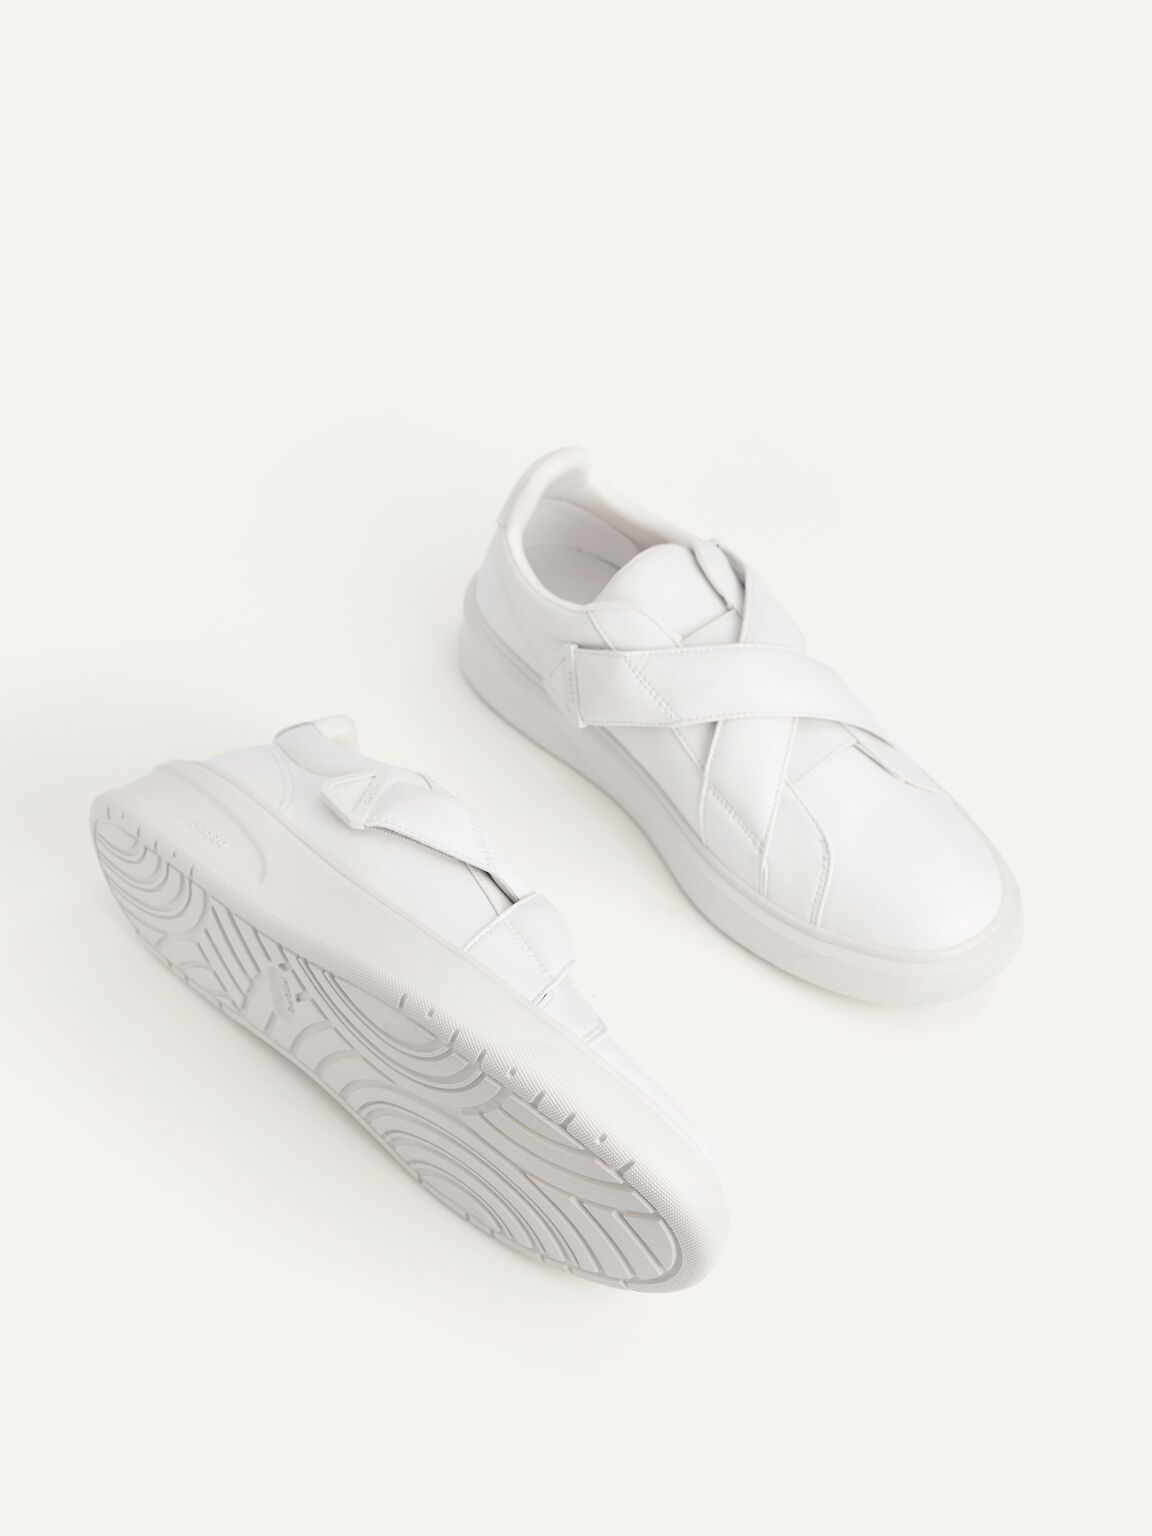 Cloudtrail Sneakers, White, hi-res